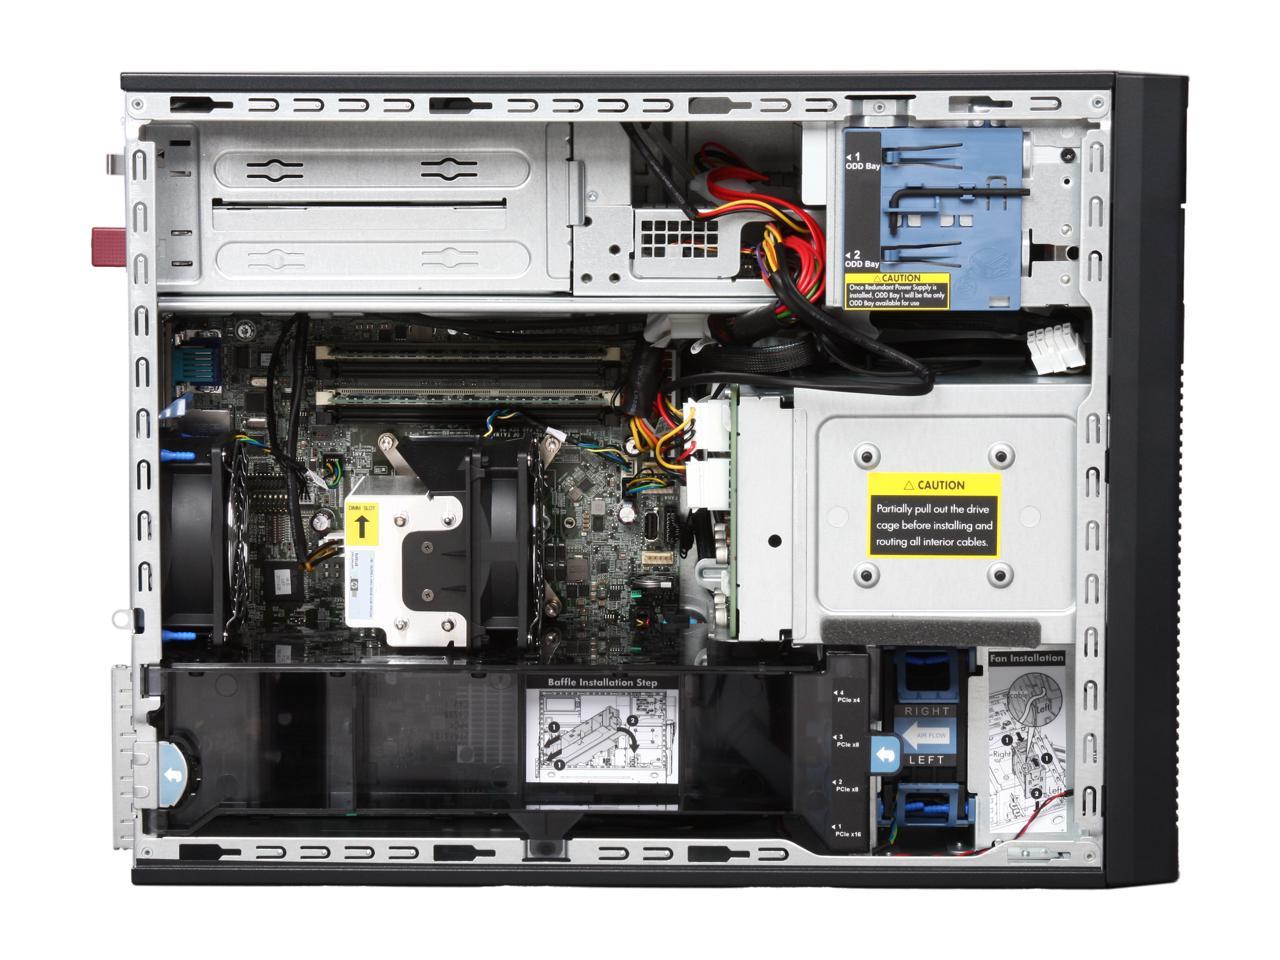 HP ProLiant ML110 G7 Tower Server System Intel Xeon E3-1240 3.3GHz 4